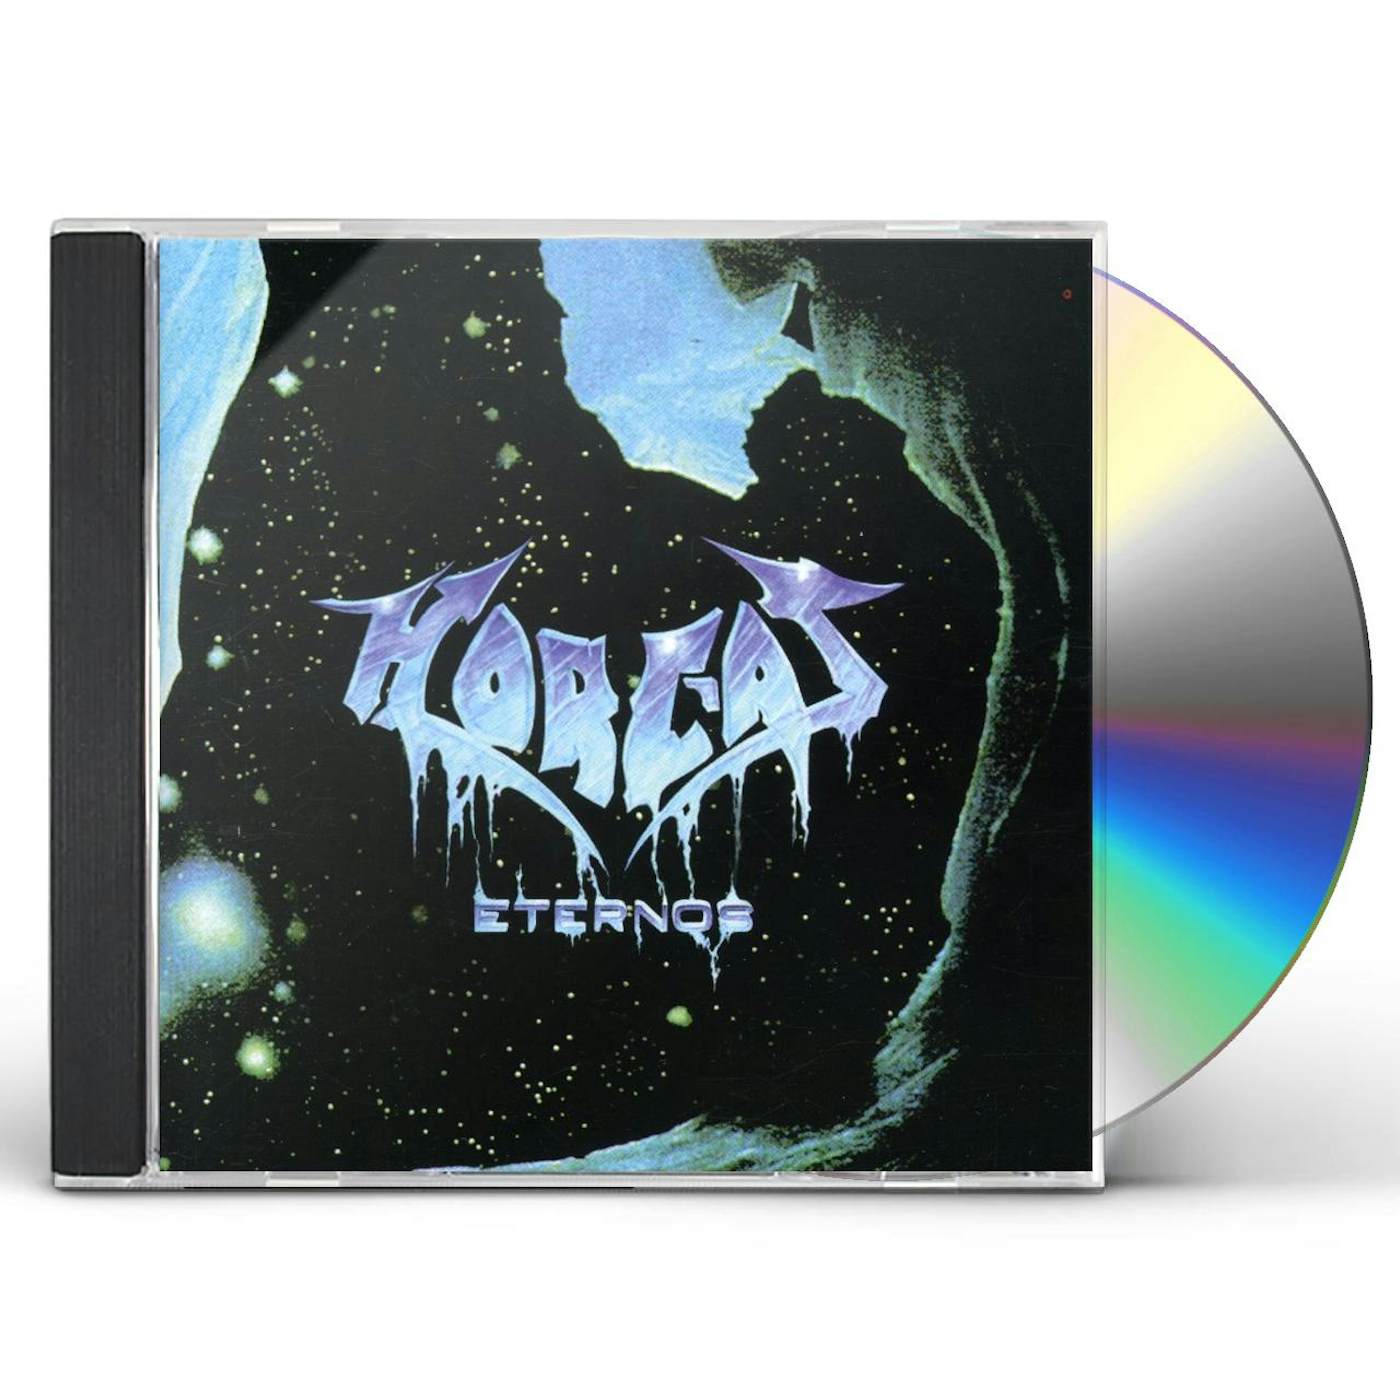 Horcas ETERNOS CD